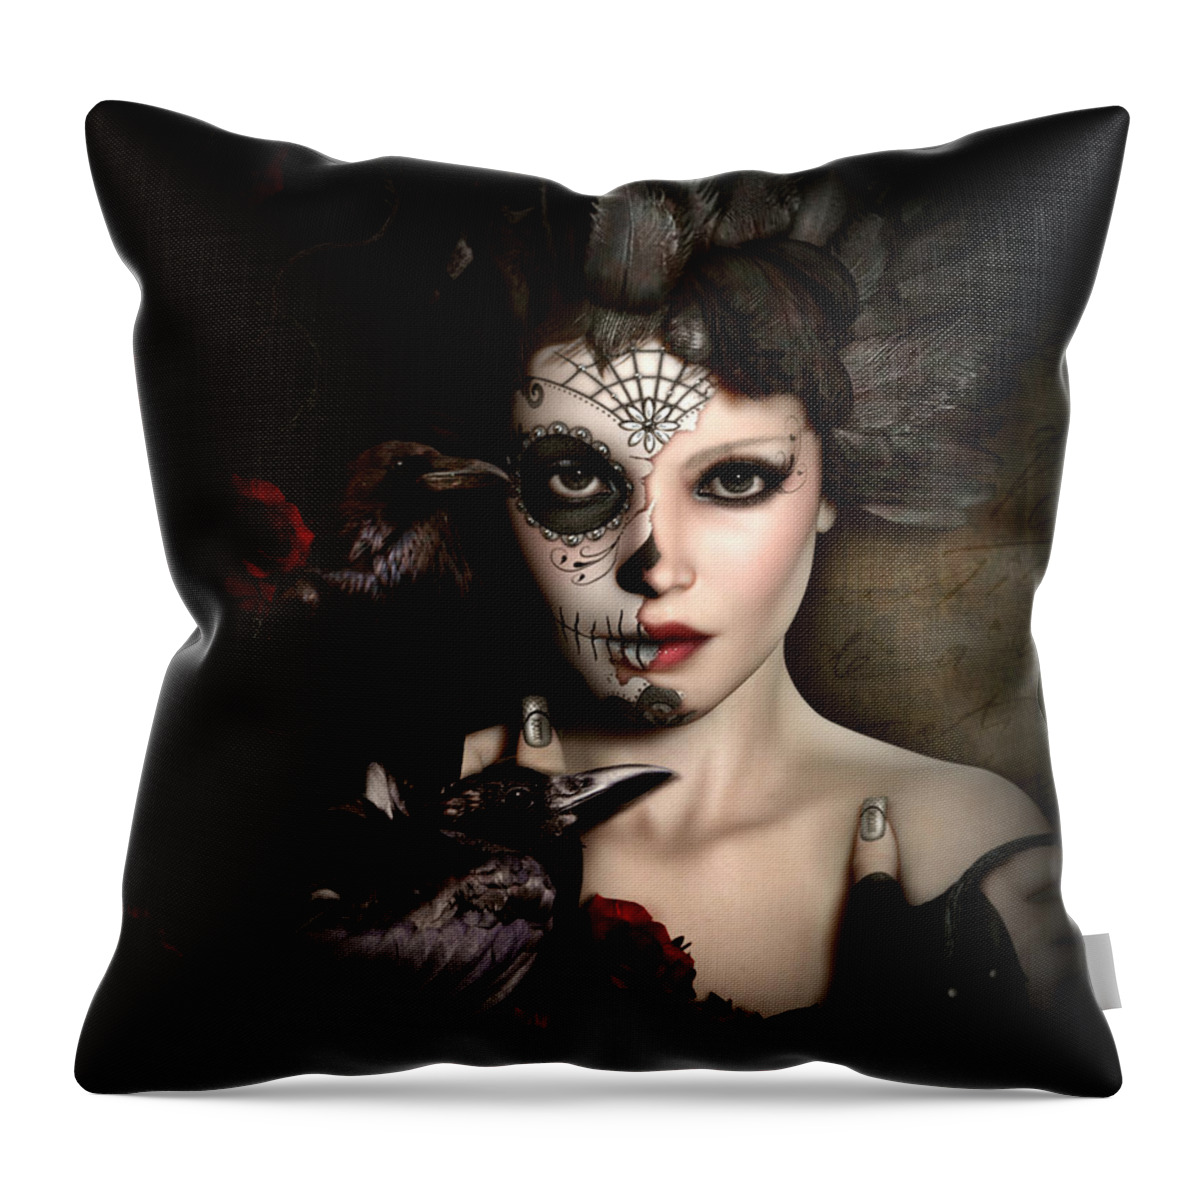 Darkside Sugar Doll Throw Pillow featuring the digital art Darkside Sugar Doll by Shanina Conway